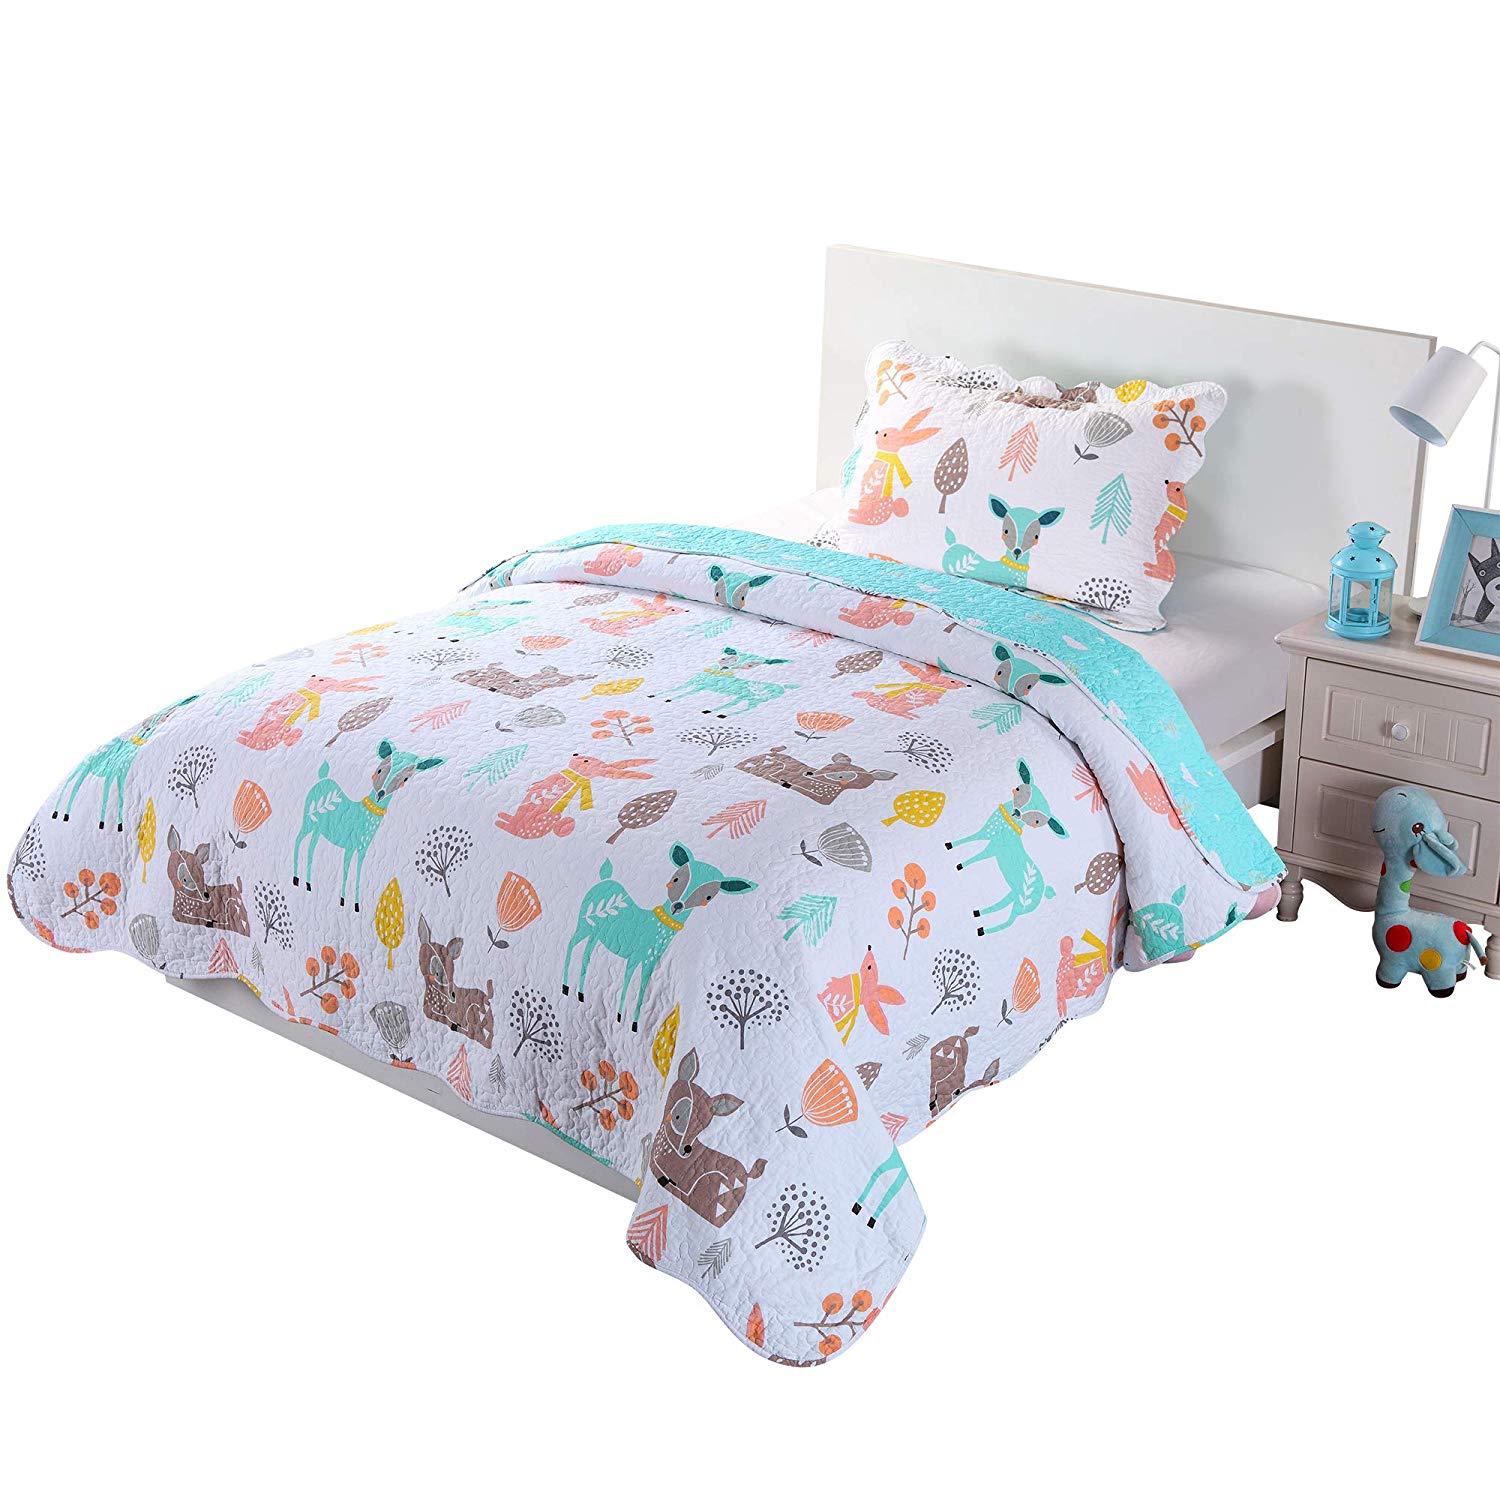 100% Cotton 2/3 Pcs Kids Quilt Bedspread Comforter Set for Teens Girls Teal Blue Forest Deer, XL1804